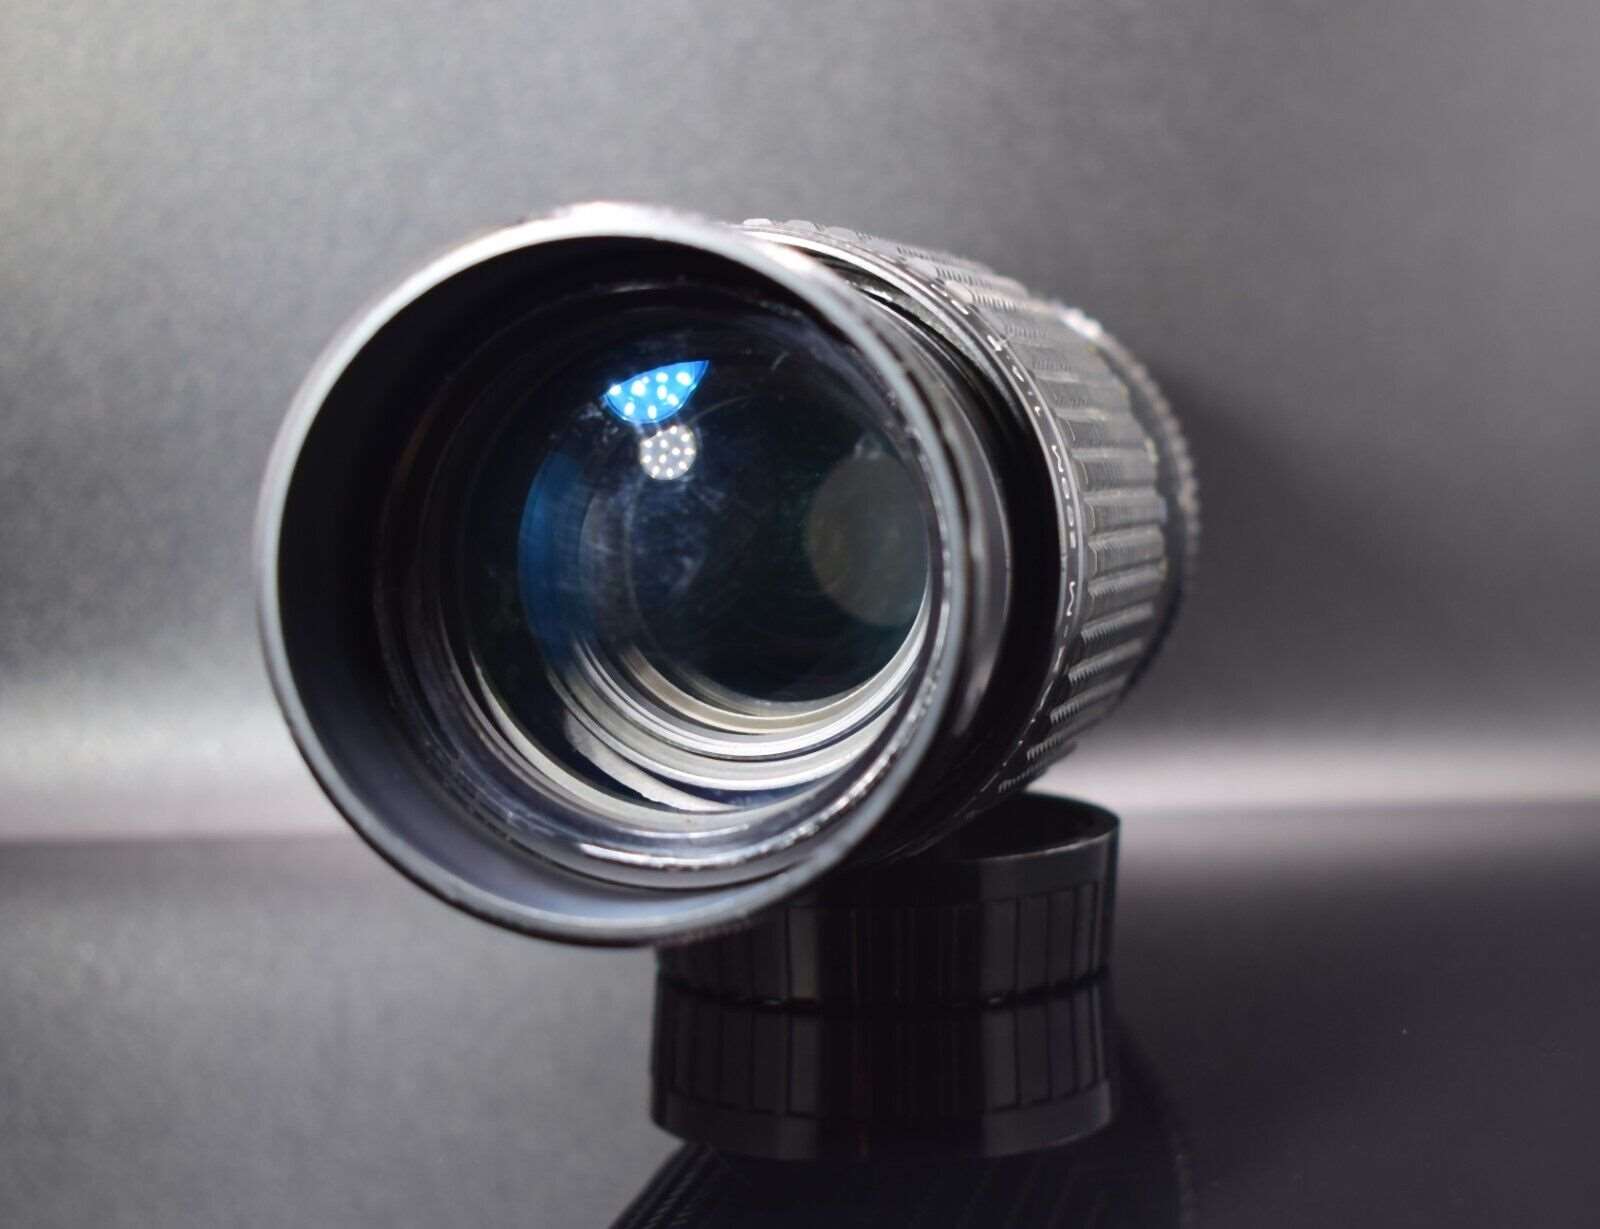 ASAHI Pentax Camera Zoom Lens SMC Pentax-M Zoom f4.5 80-200mm in Black with Caps